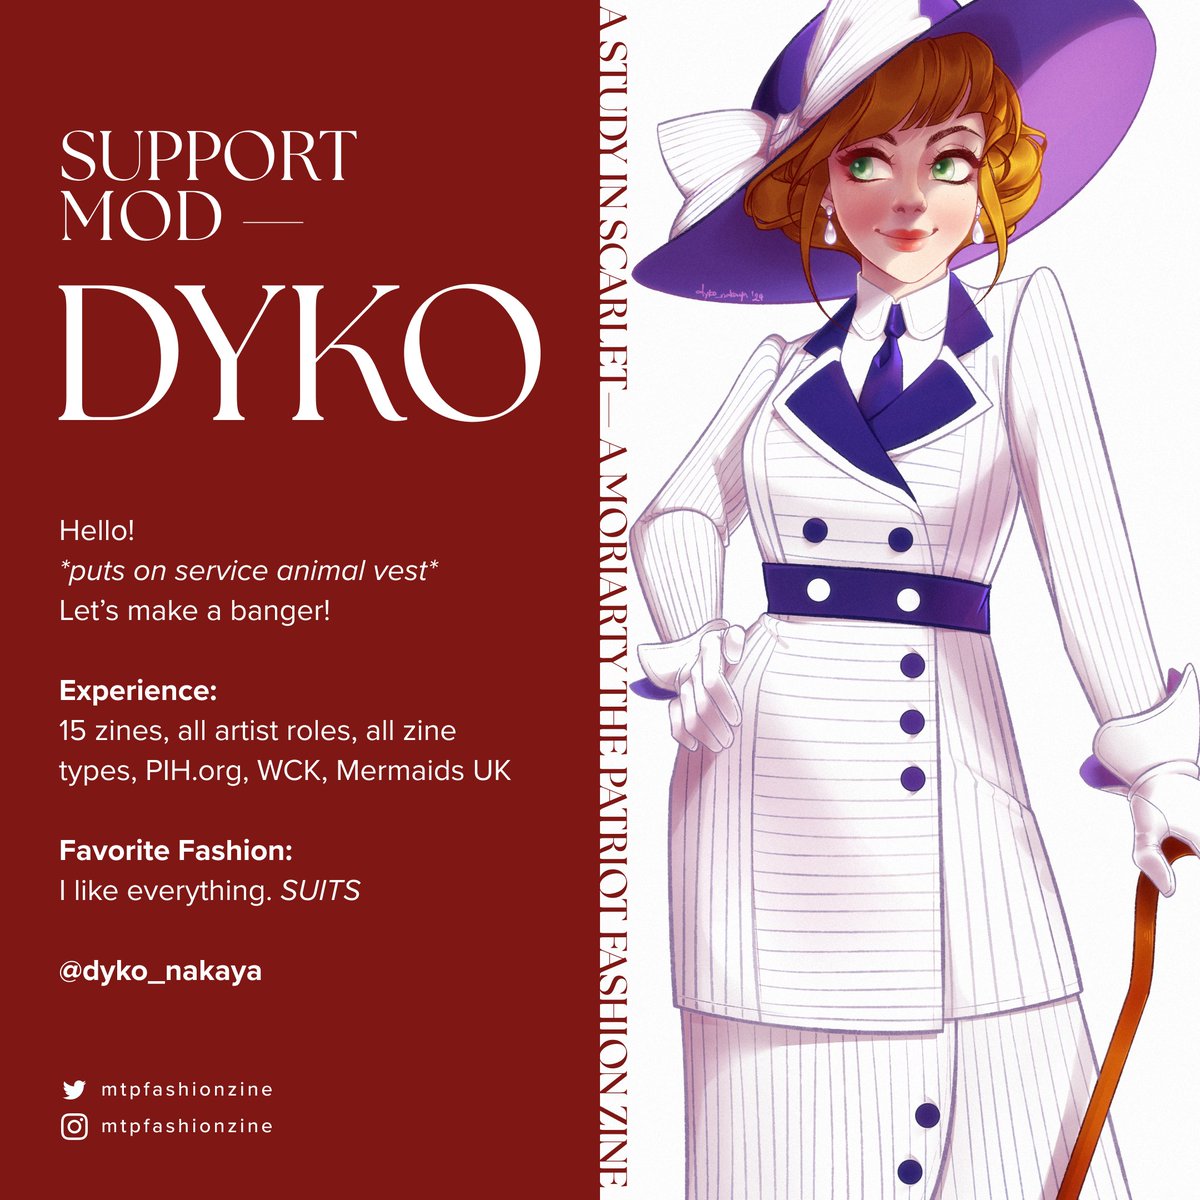 Meet the Support Mod, Dyko @dyko_nakaya